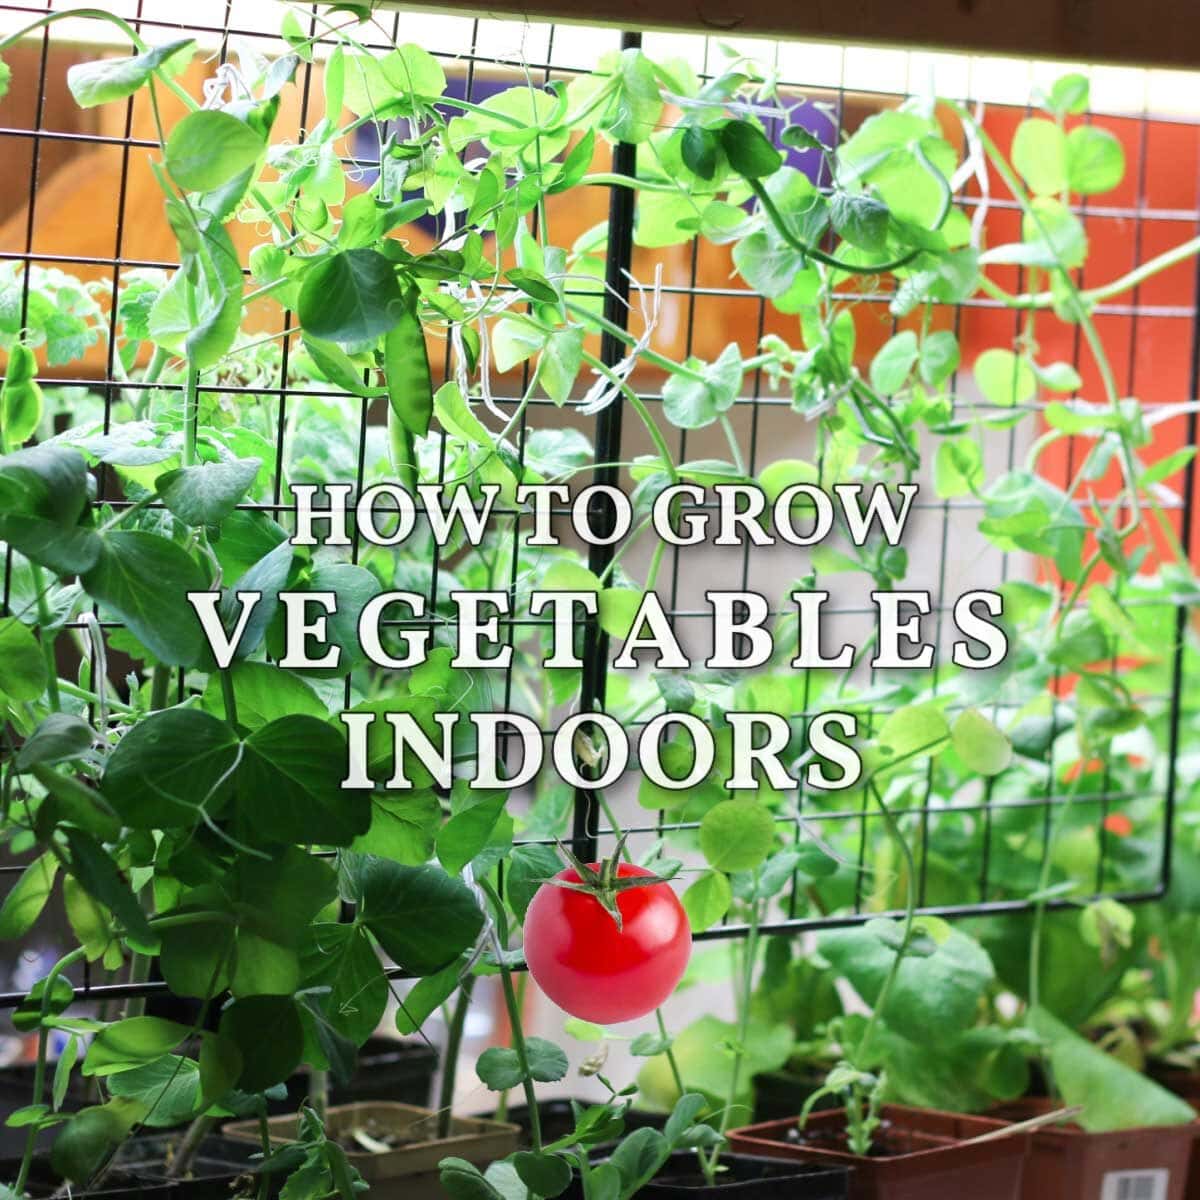 Deliciously Fresh: Unique Indoor Garden Ideas for Nourishing Your Food